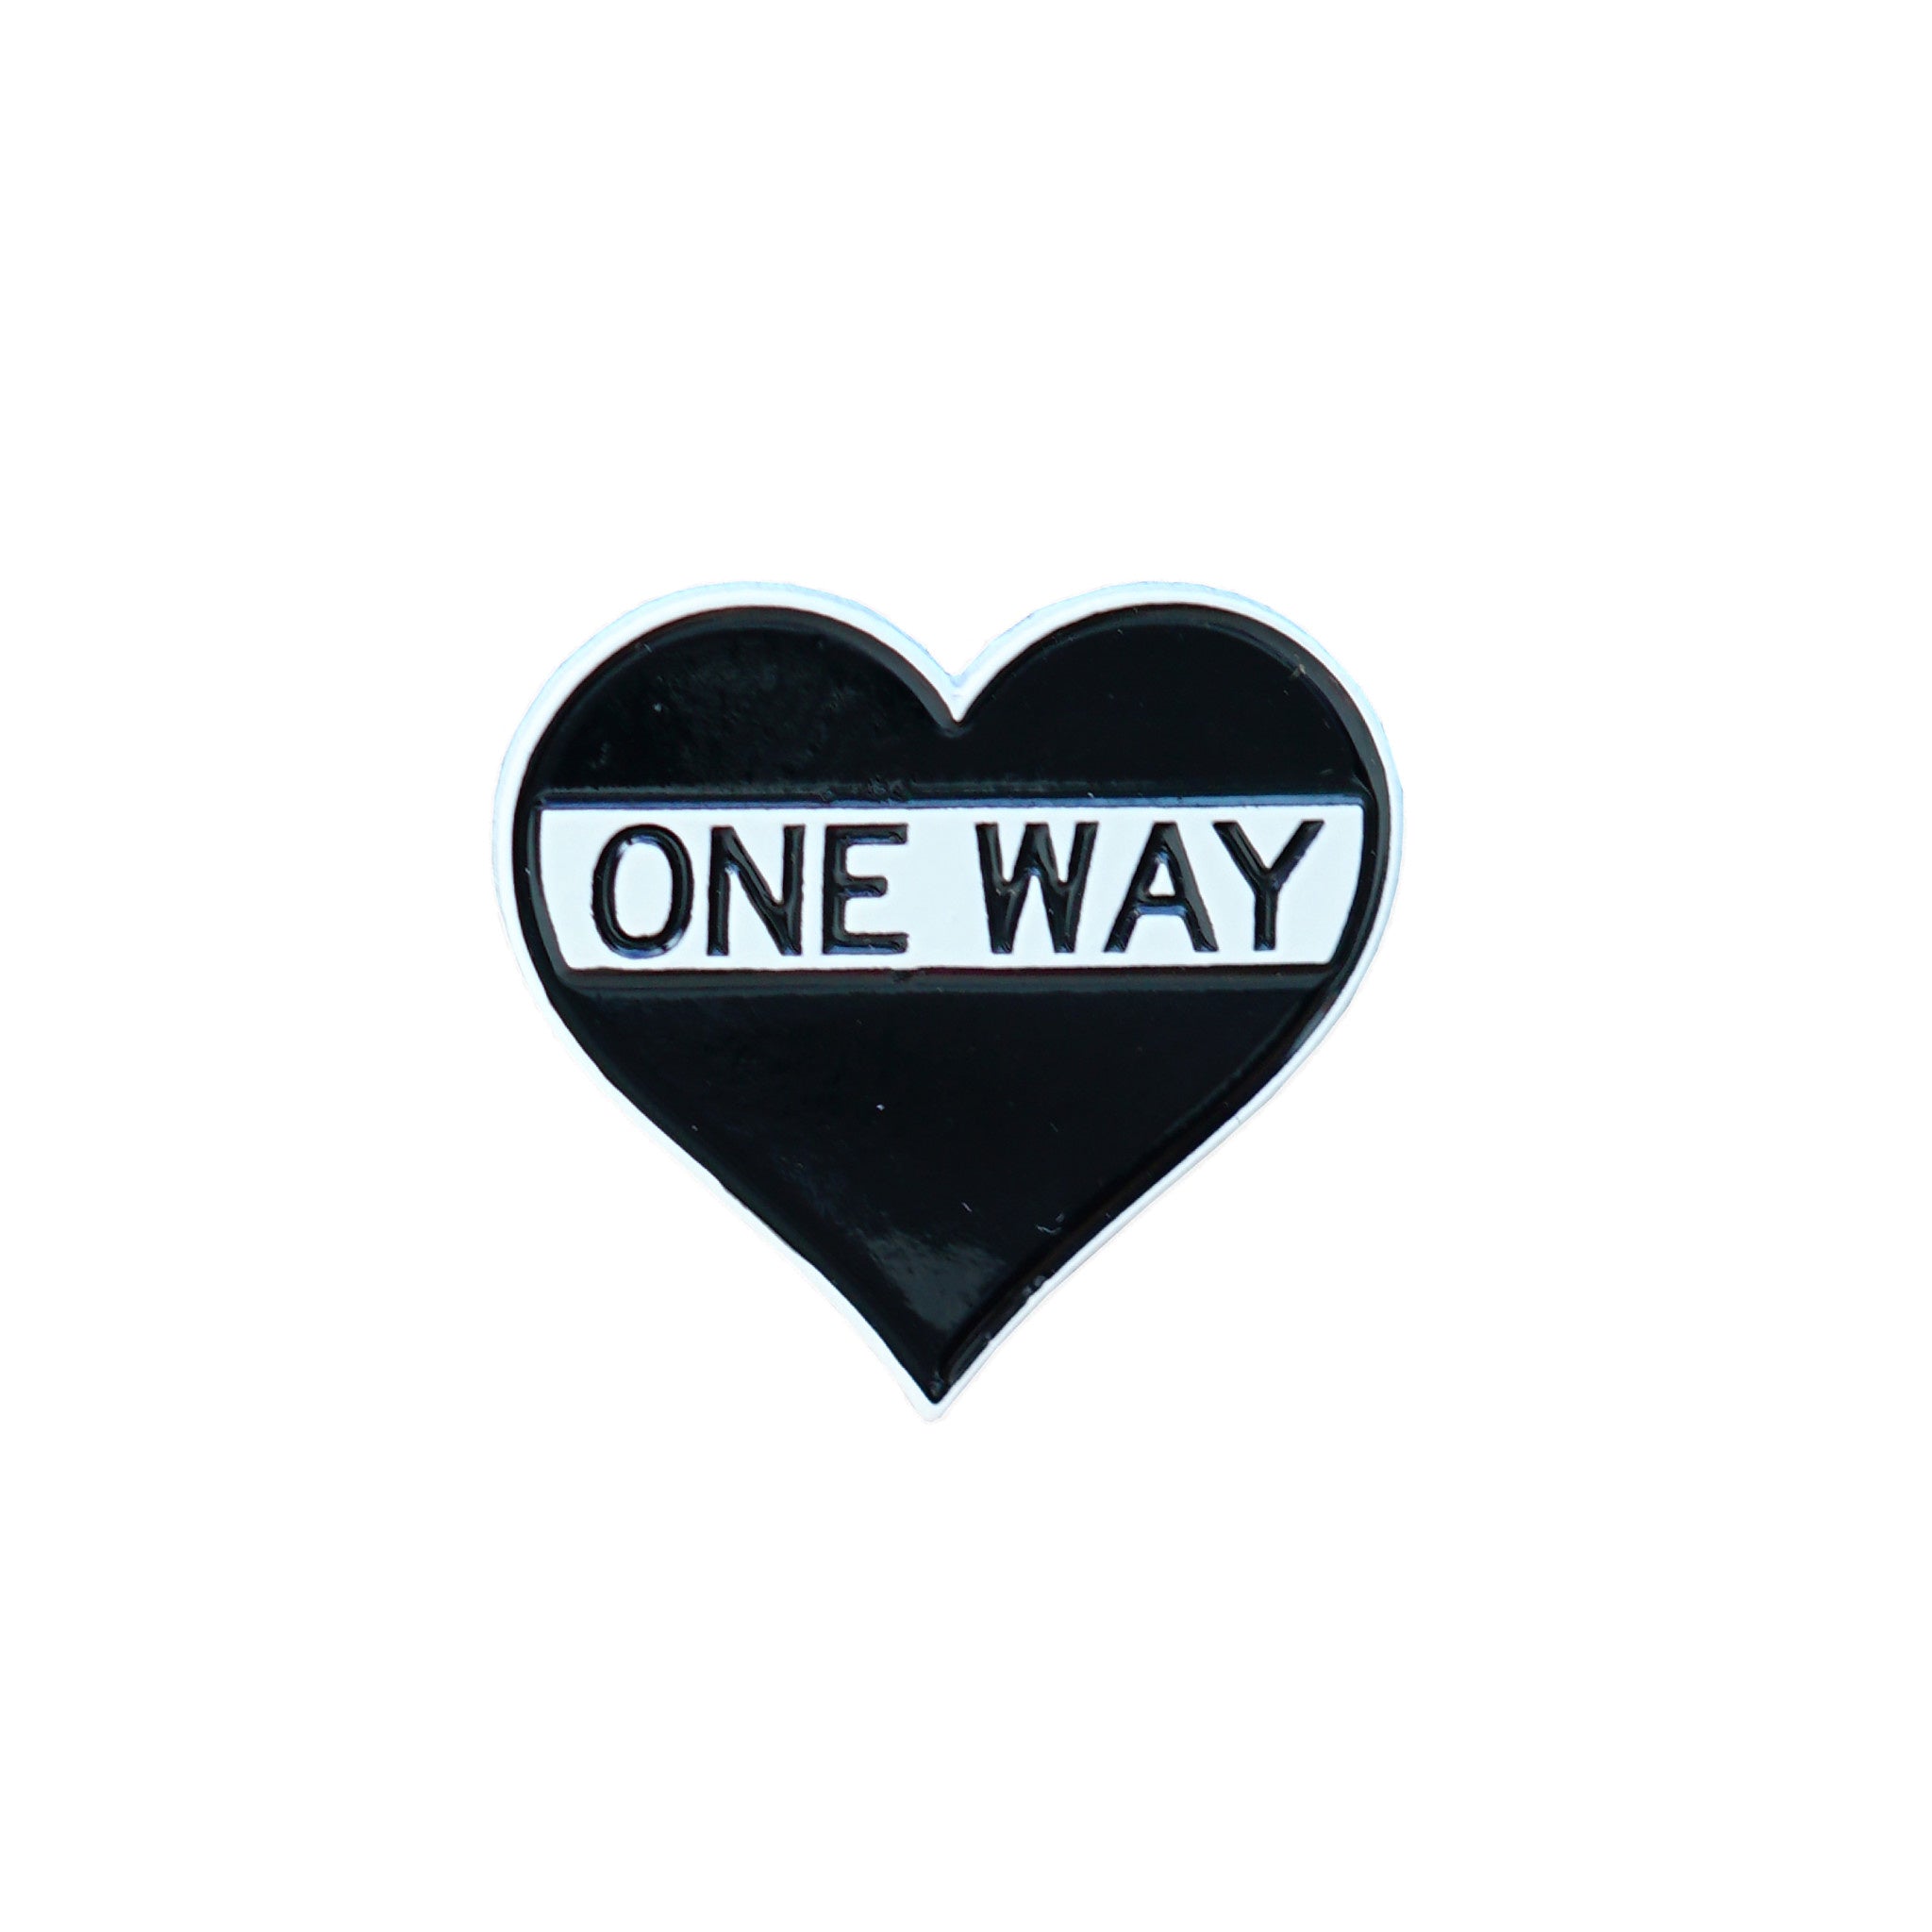 Scott Froschauer One Way Heart Pin - Wynwood Walls Shop